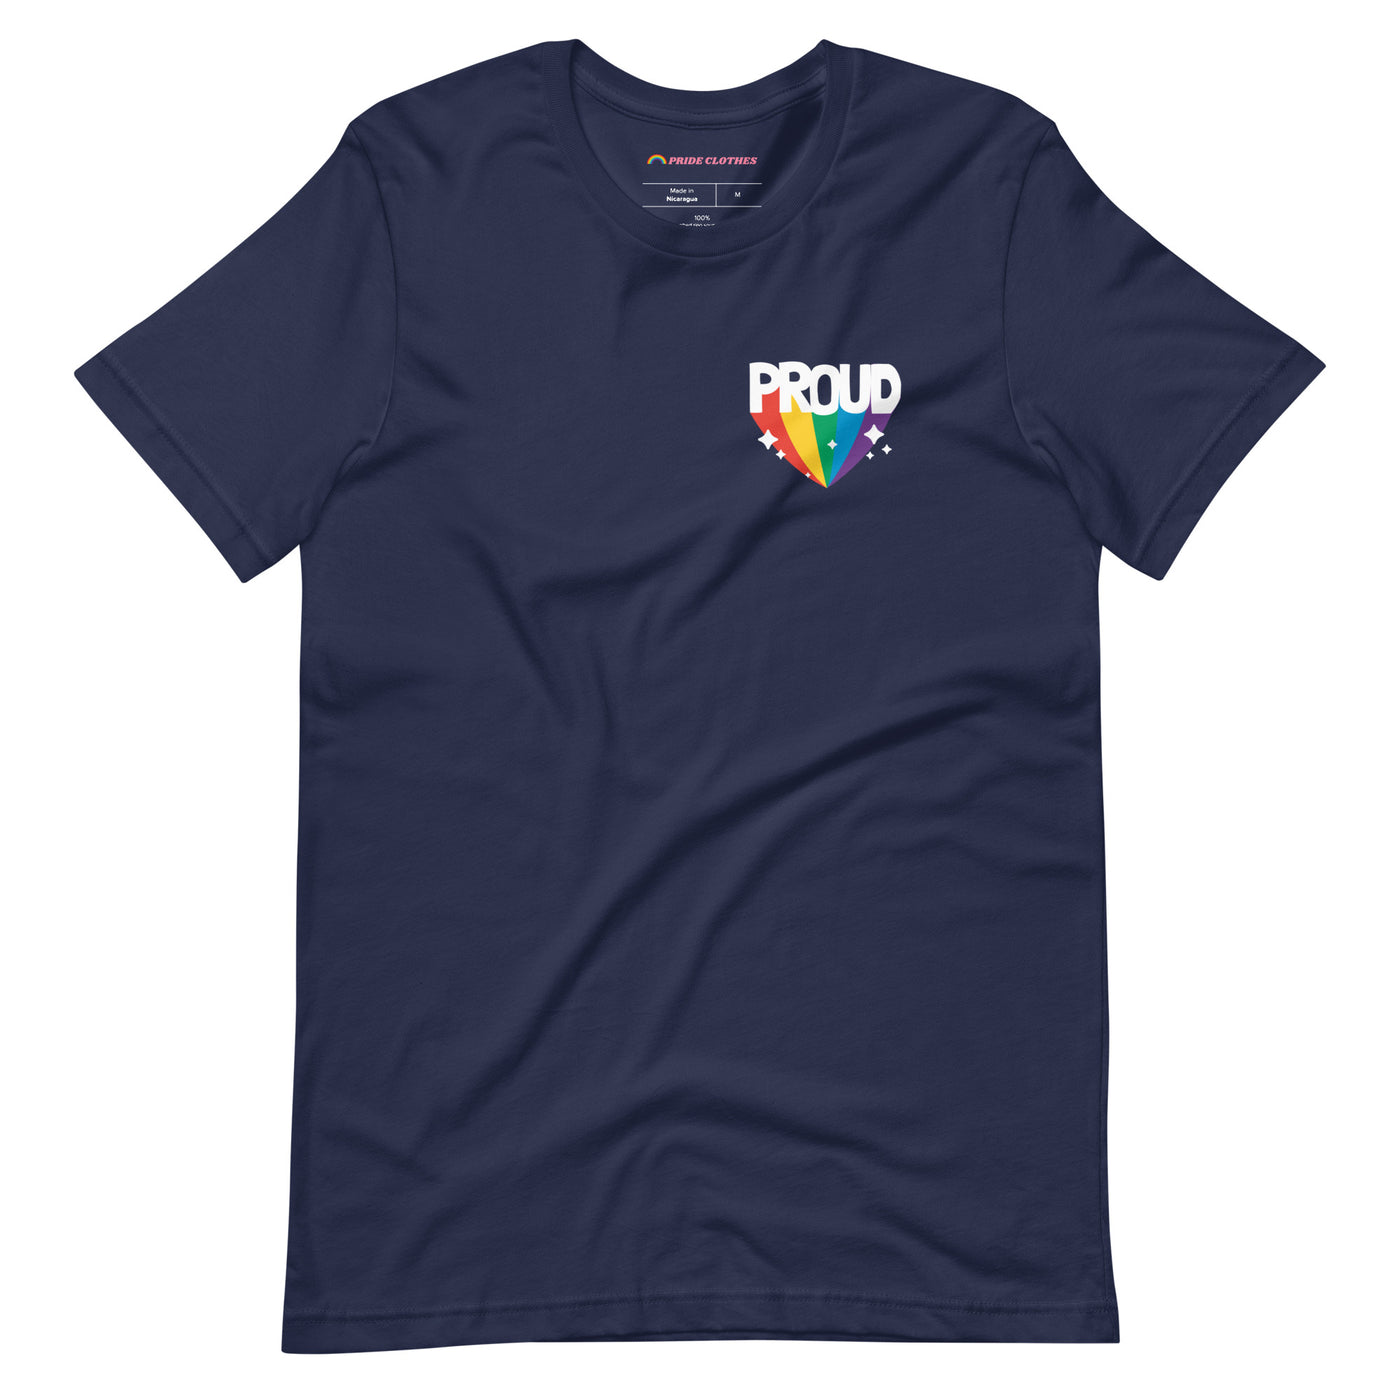 Pride Clothes - Proud of My True Rainbow Colors Gay Pride T-Shirt - Navy